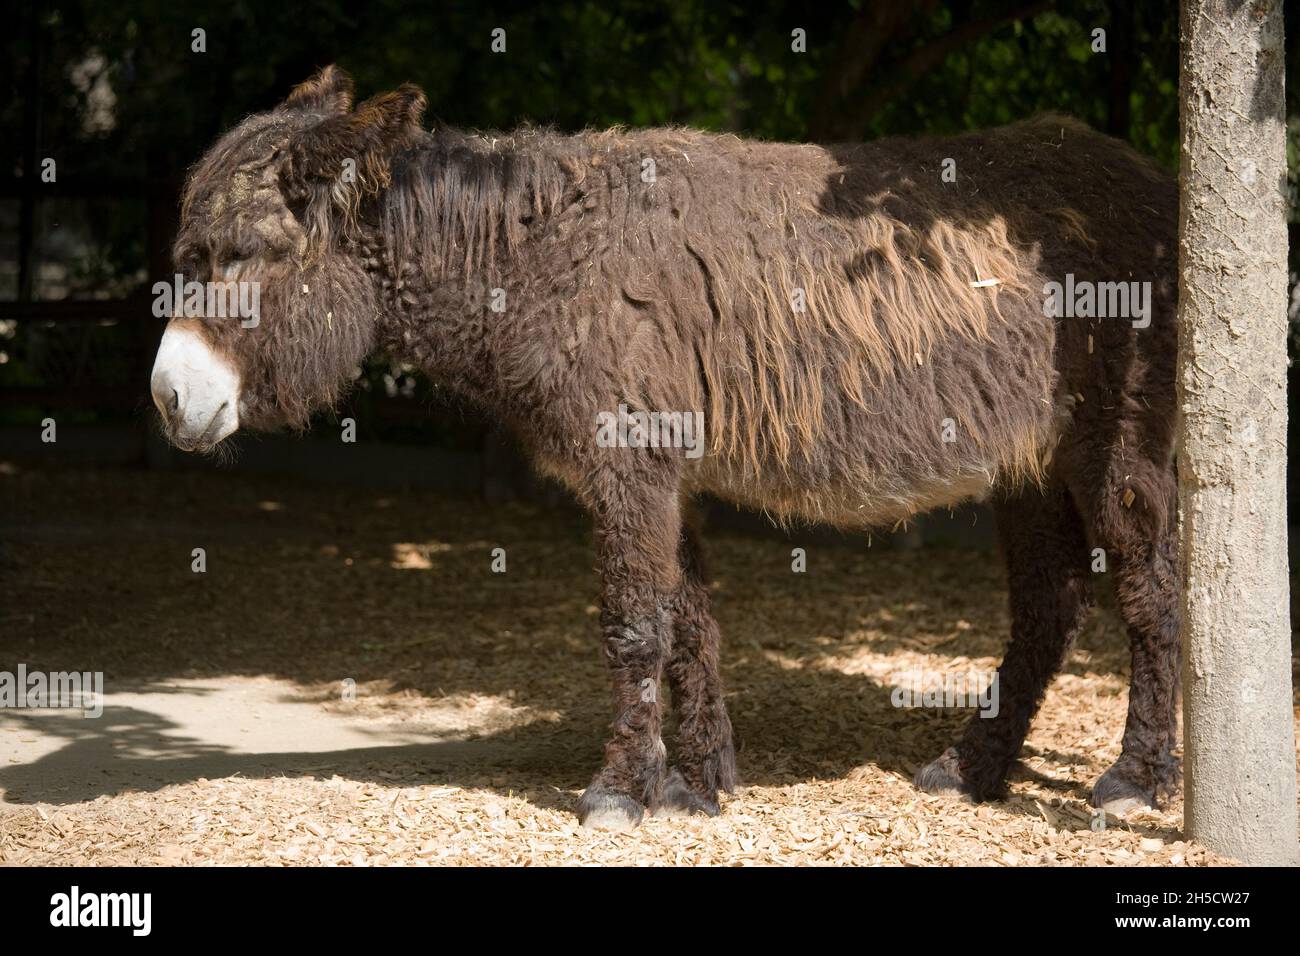 Poitou donkey (Equus asinus asinus), in an outdoor enclosure at a zoo Stock Photo